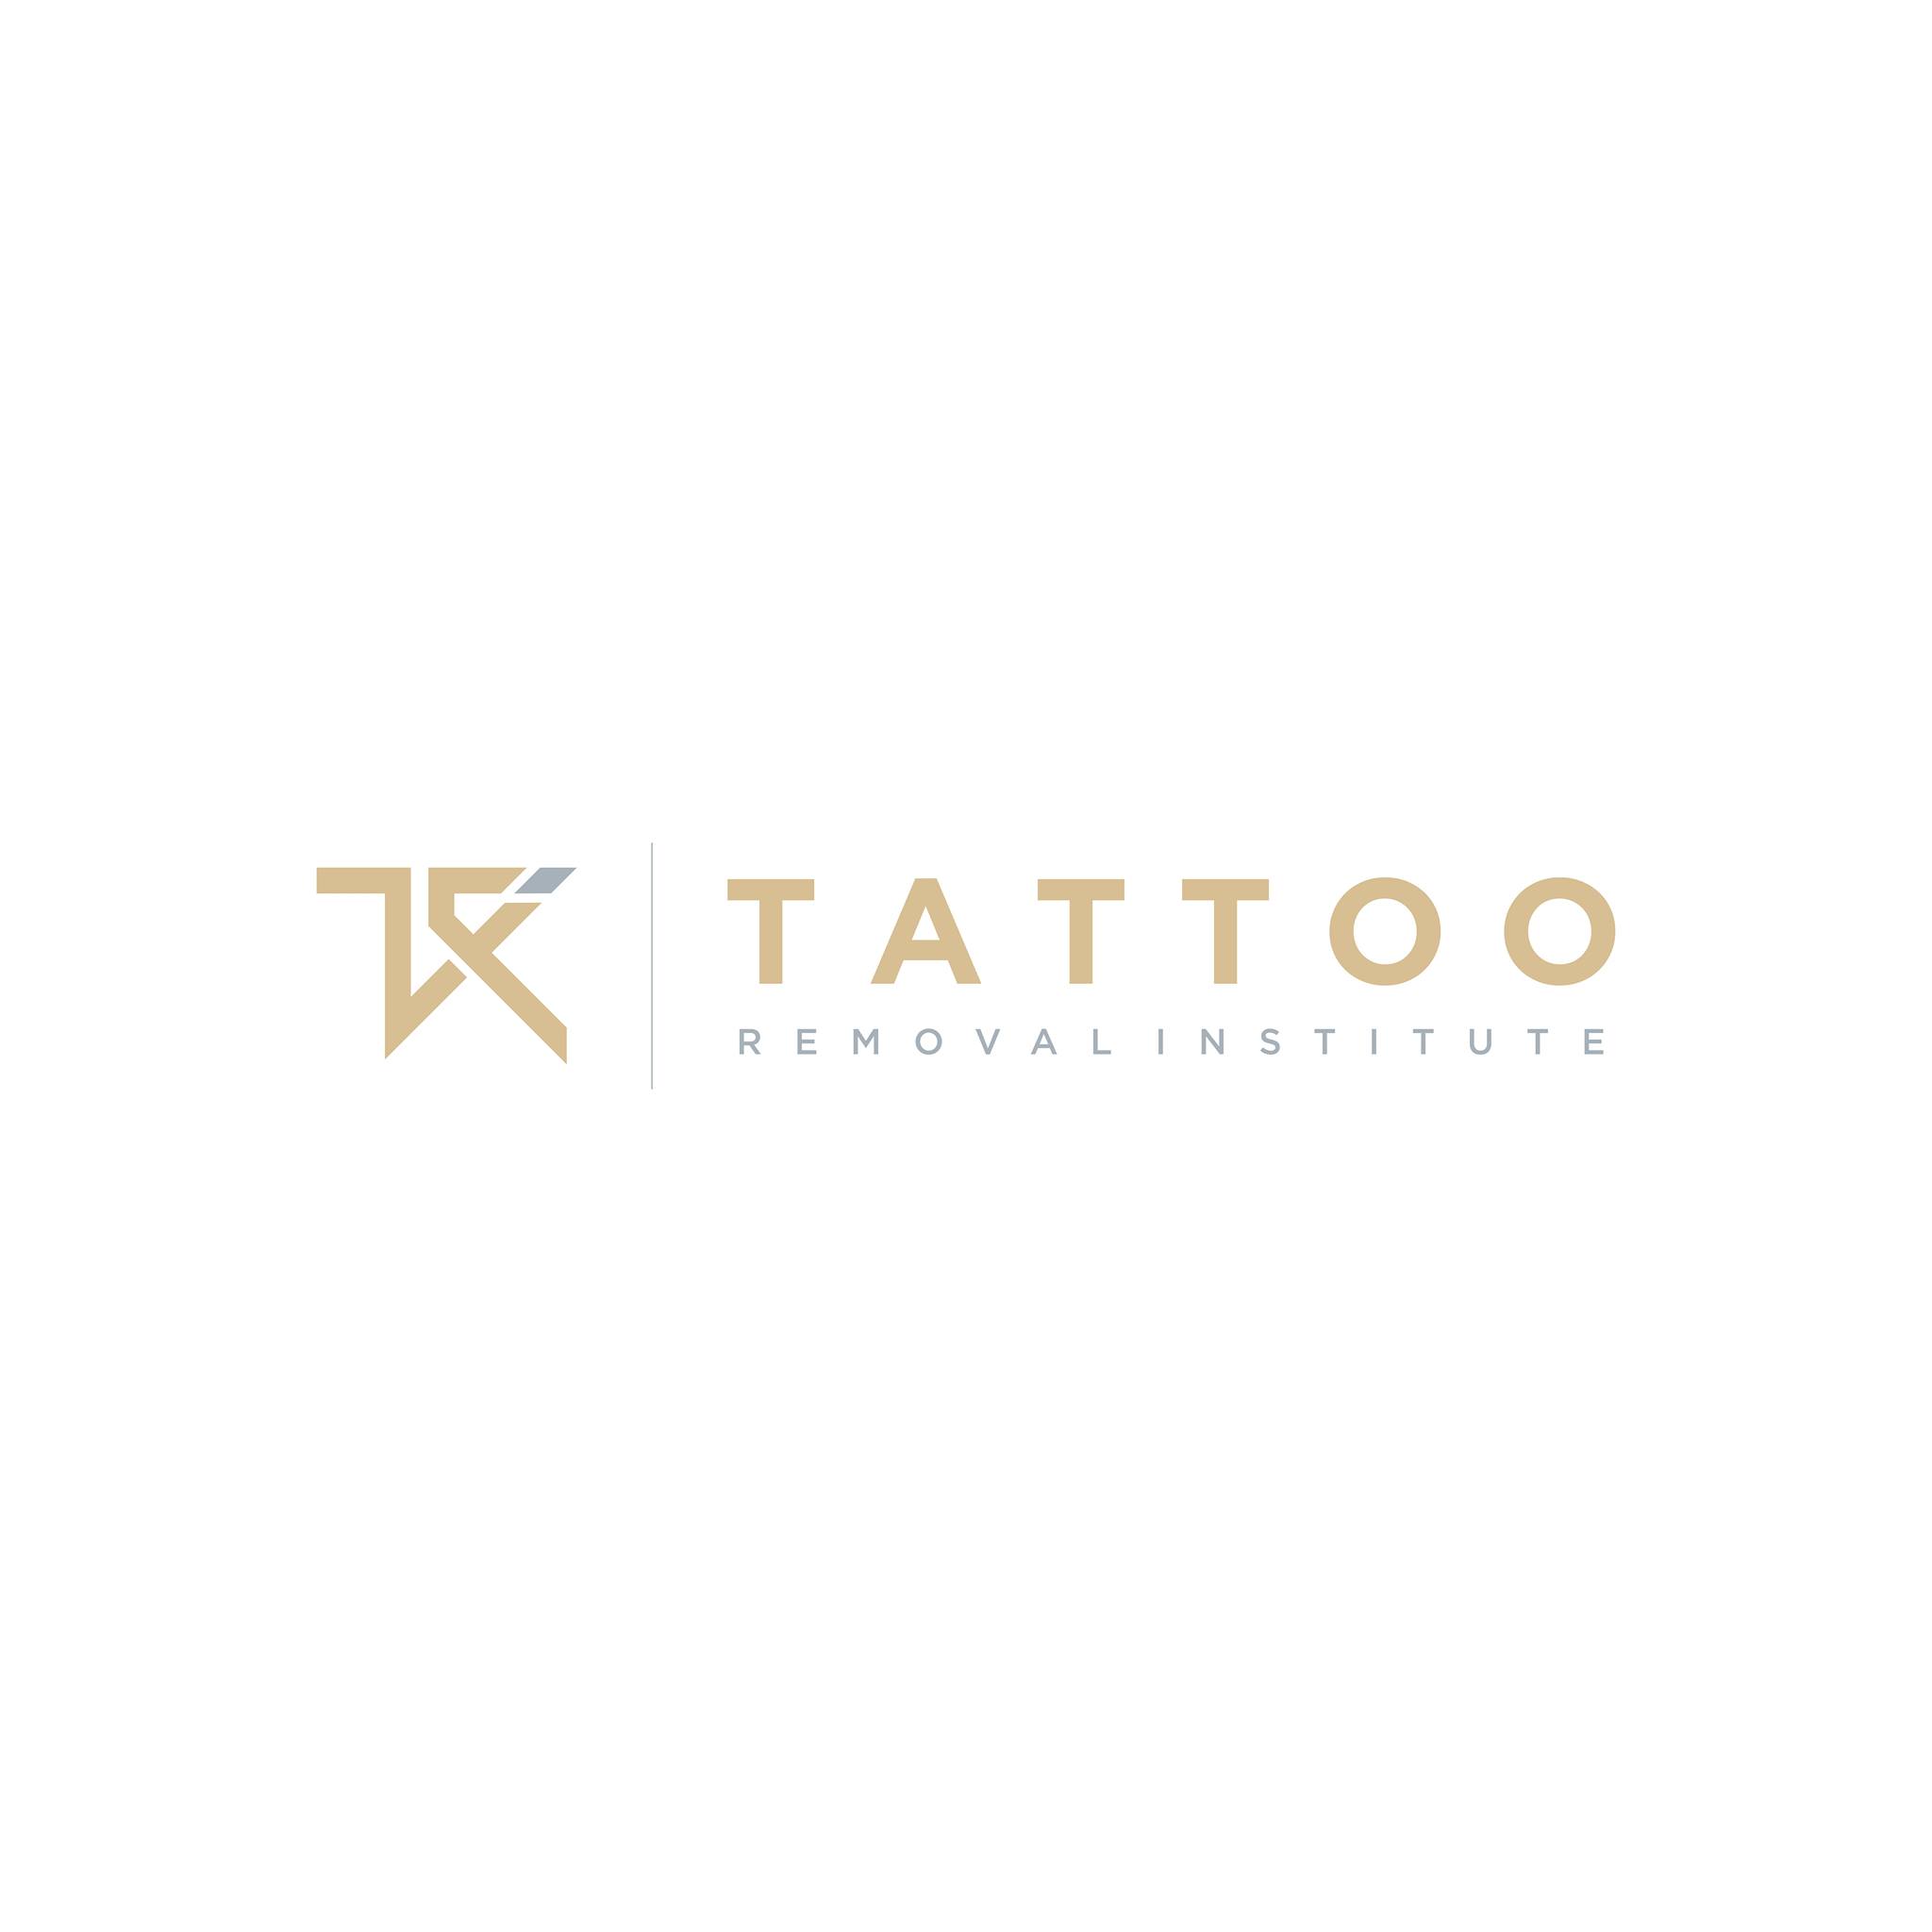 Tattoo Removal Institute